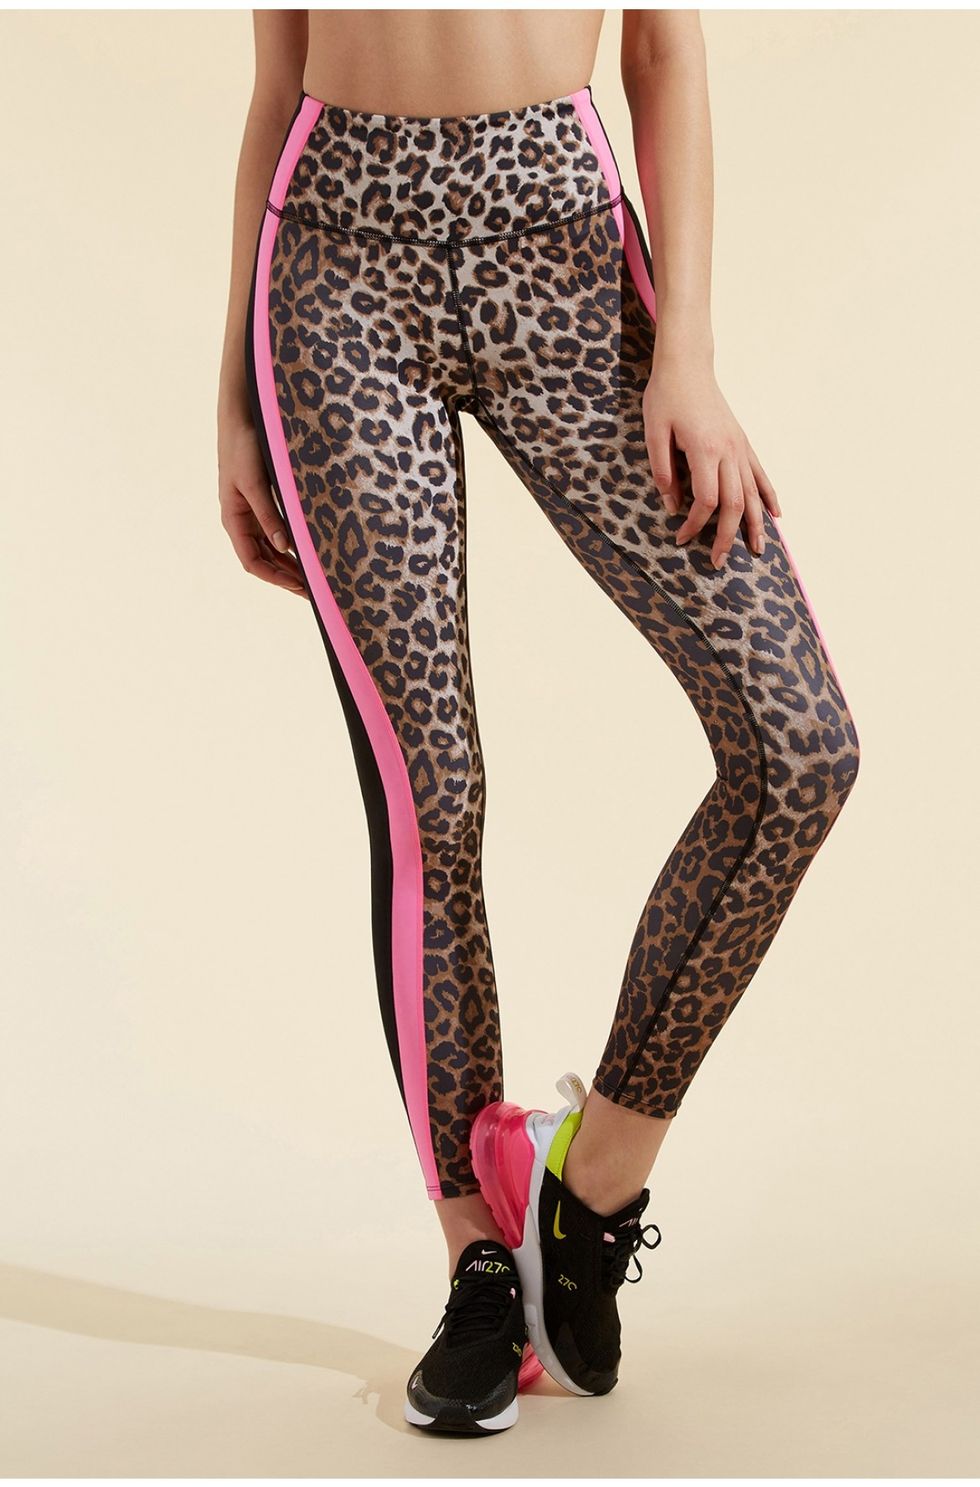 Veronica Beard x Bandier Leopard Print Neon Leggings Review - Most